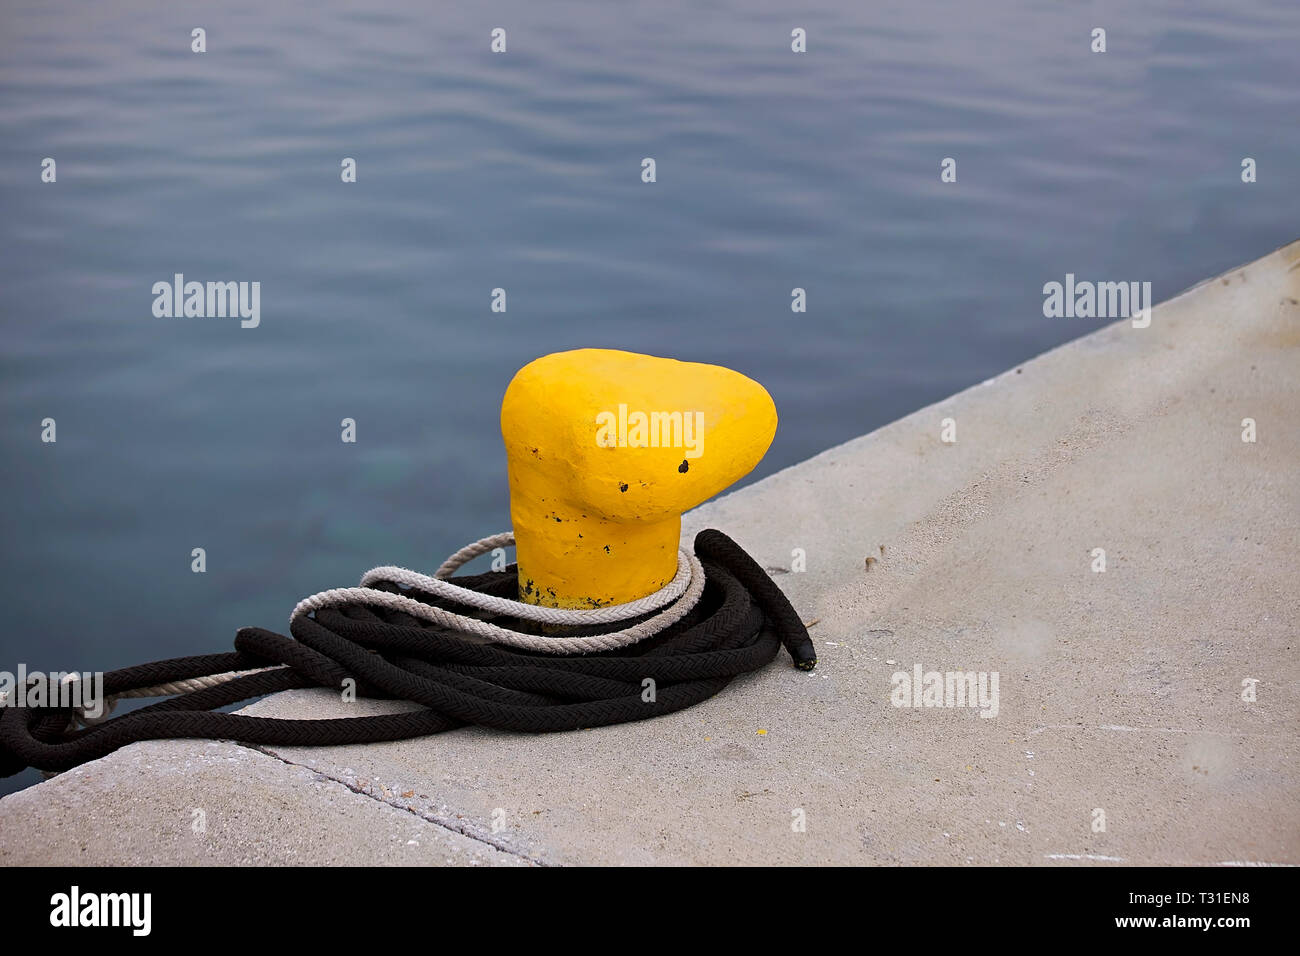 Yellow bollard on the edge of marina with rope. Stock Image Stock Photo